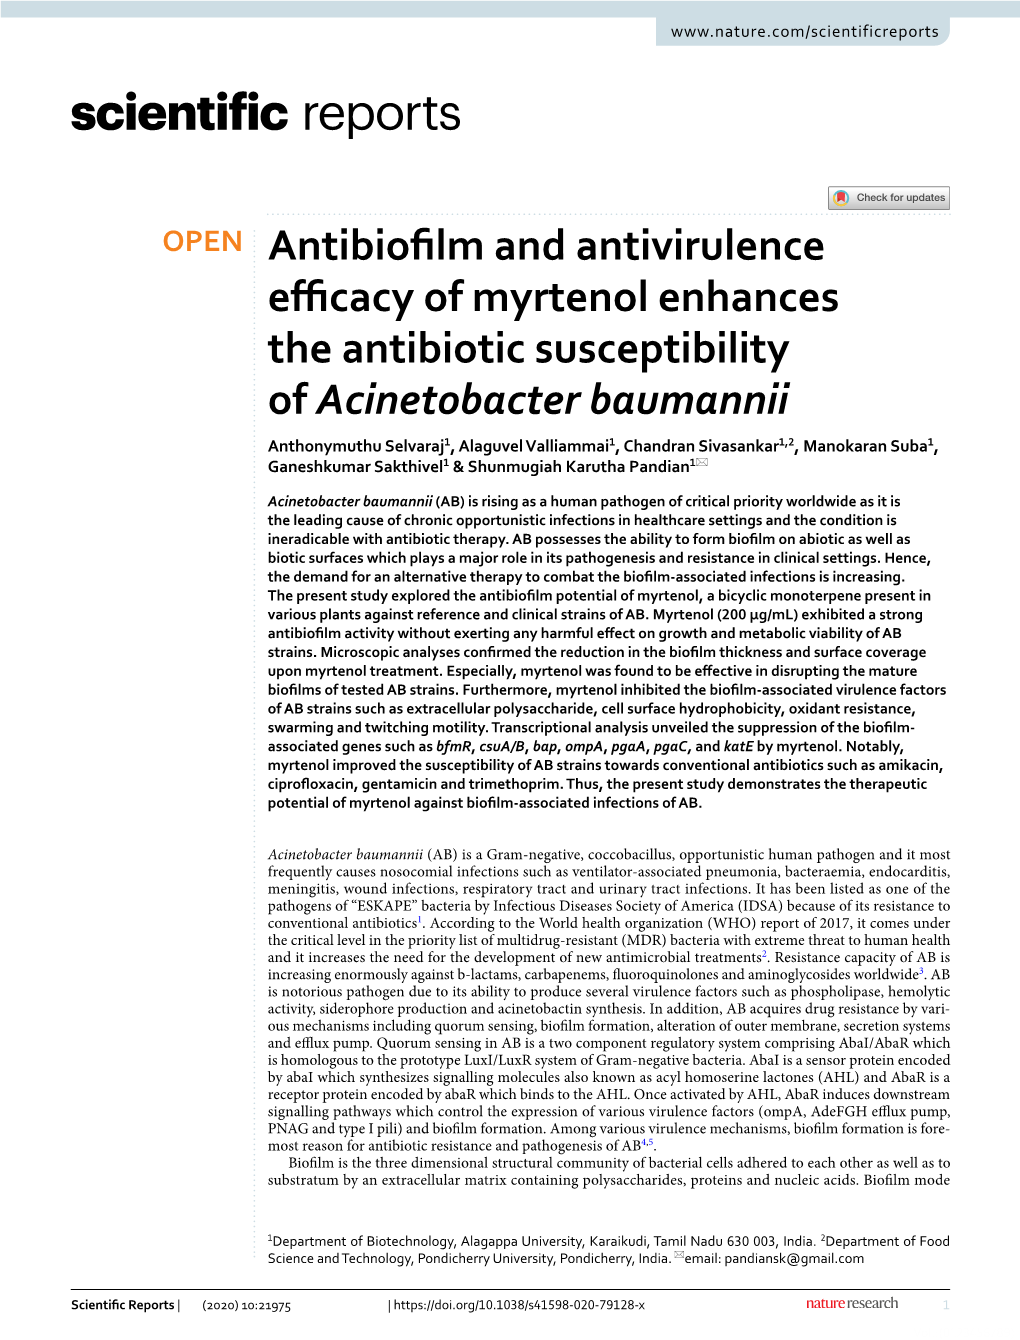 Antibiofilm and Antivirulence Efficacy of Myrtenol Enhances the Antibiotic